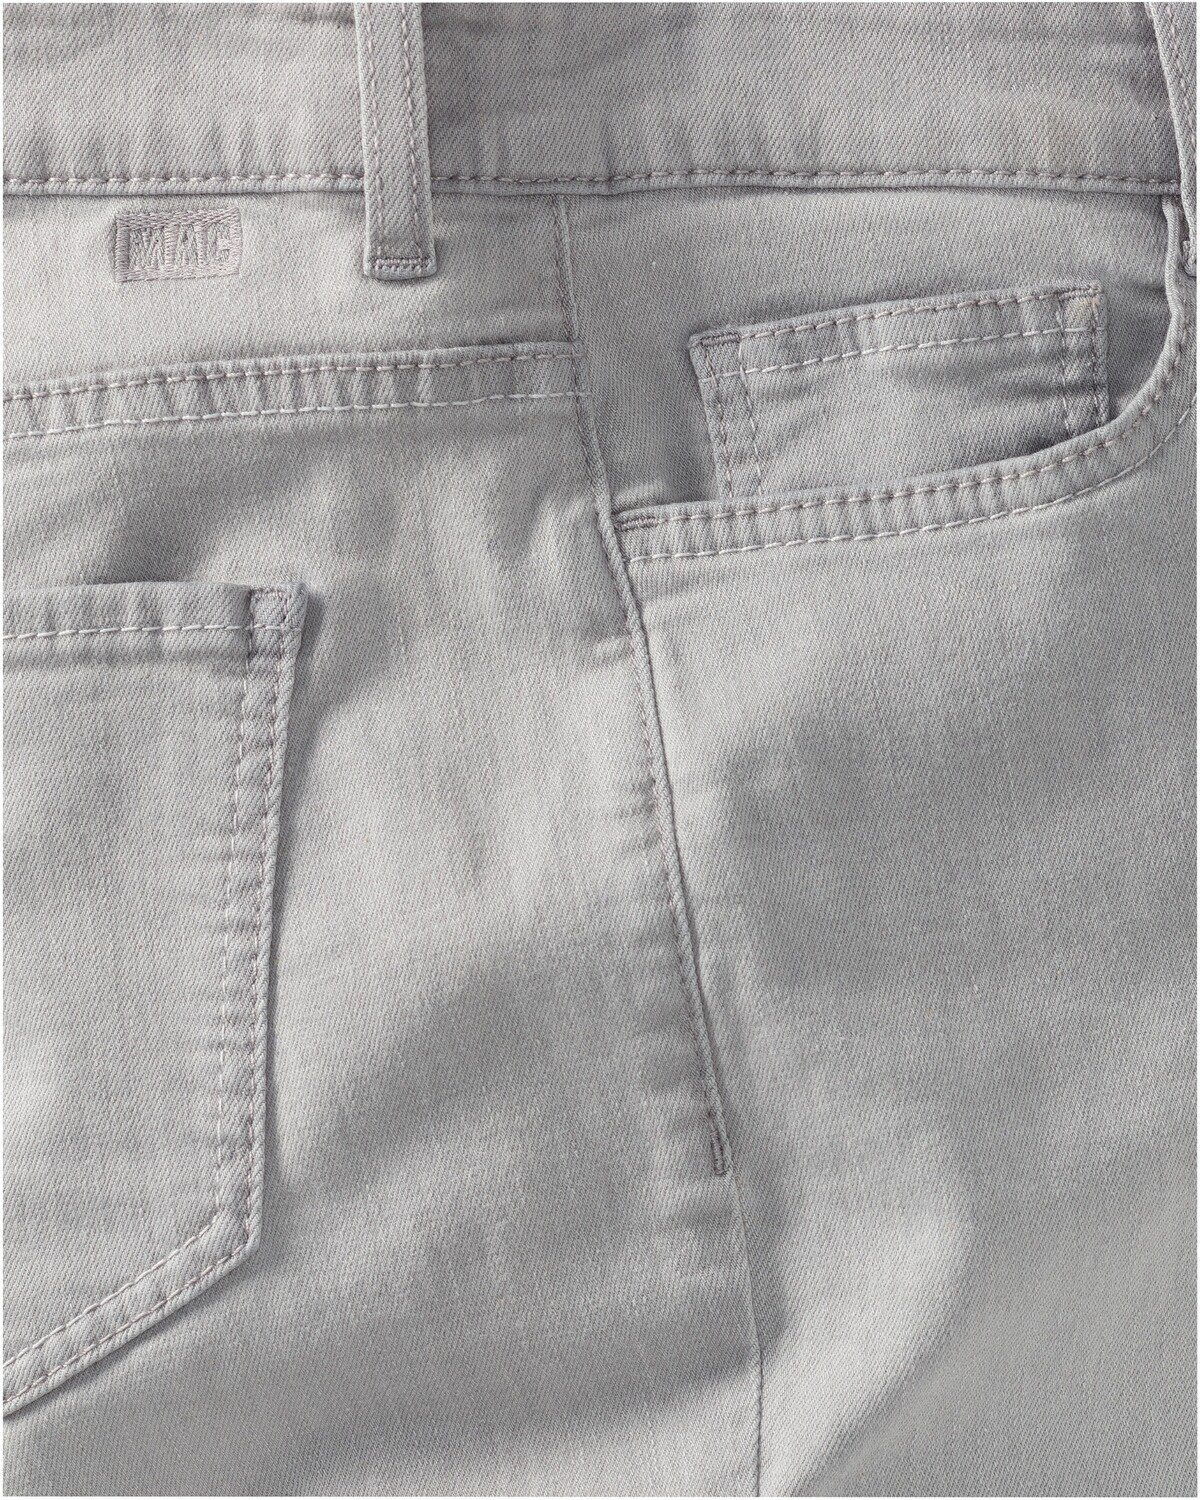 MAC 5-Pocket-Jeans »Jeans Angela Pipe« online kaufen | OTTO